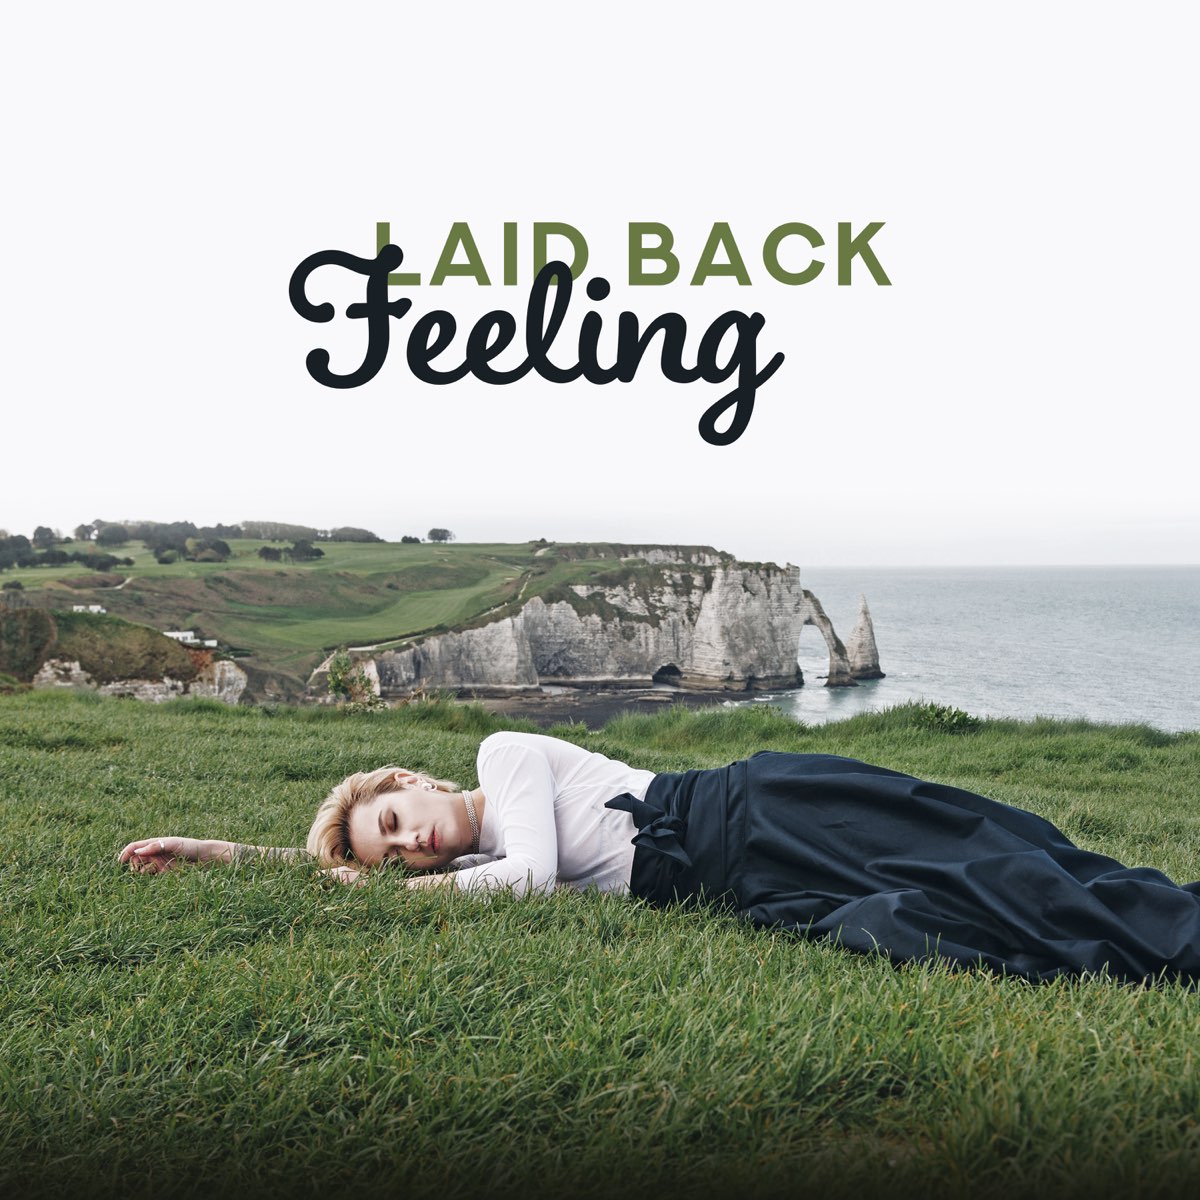 Feeling бак. Laid back. Laid back - Healing feeling (2019).